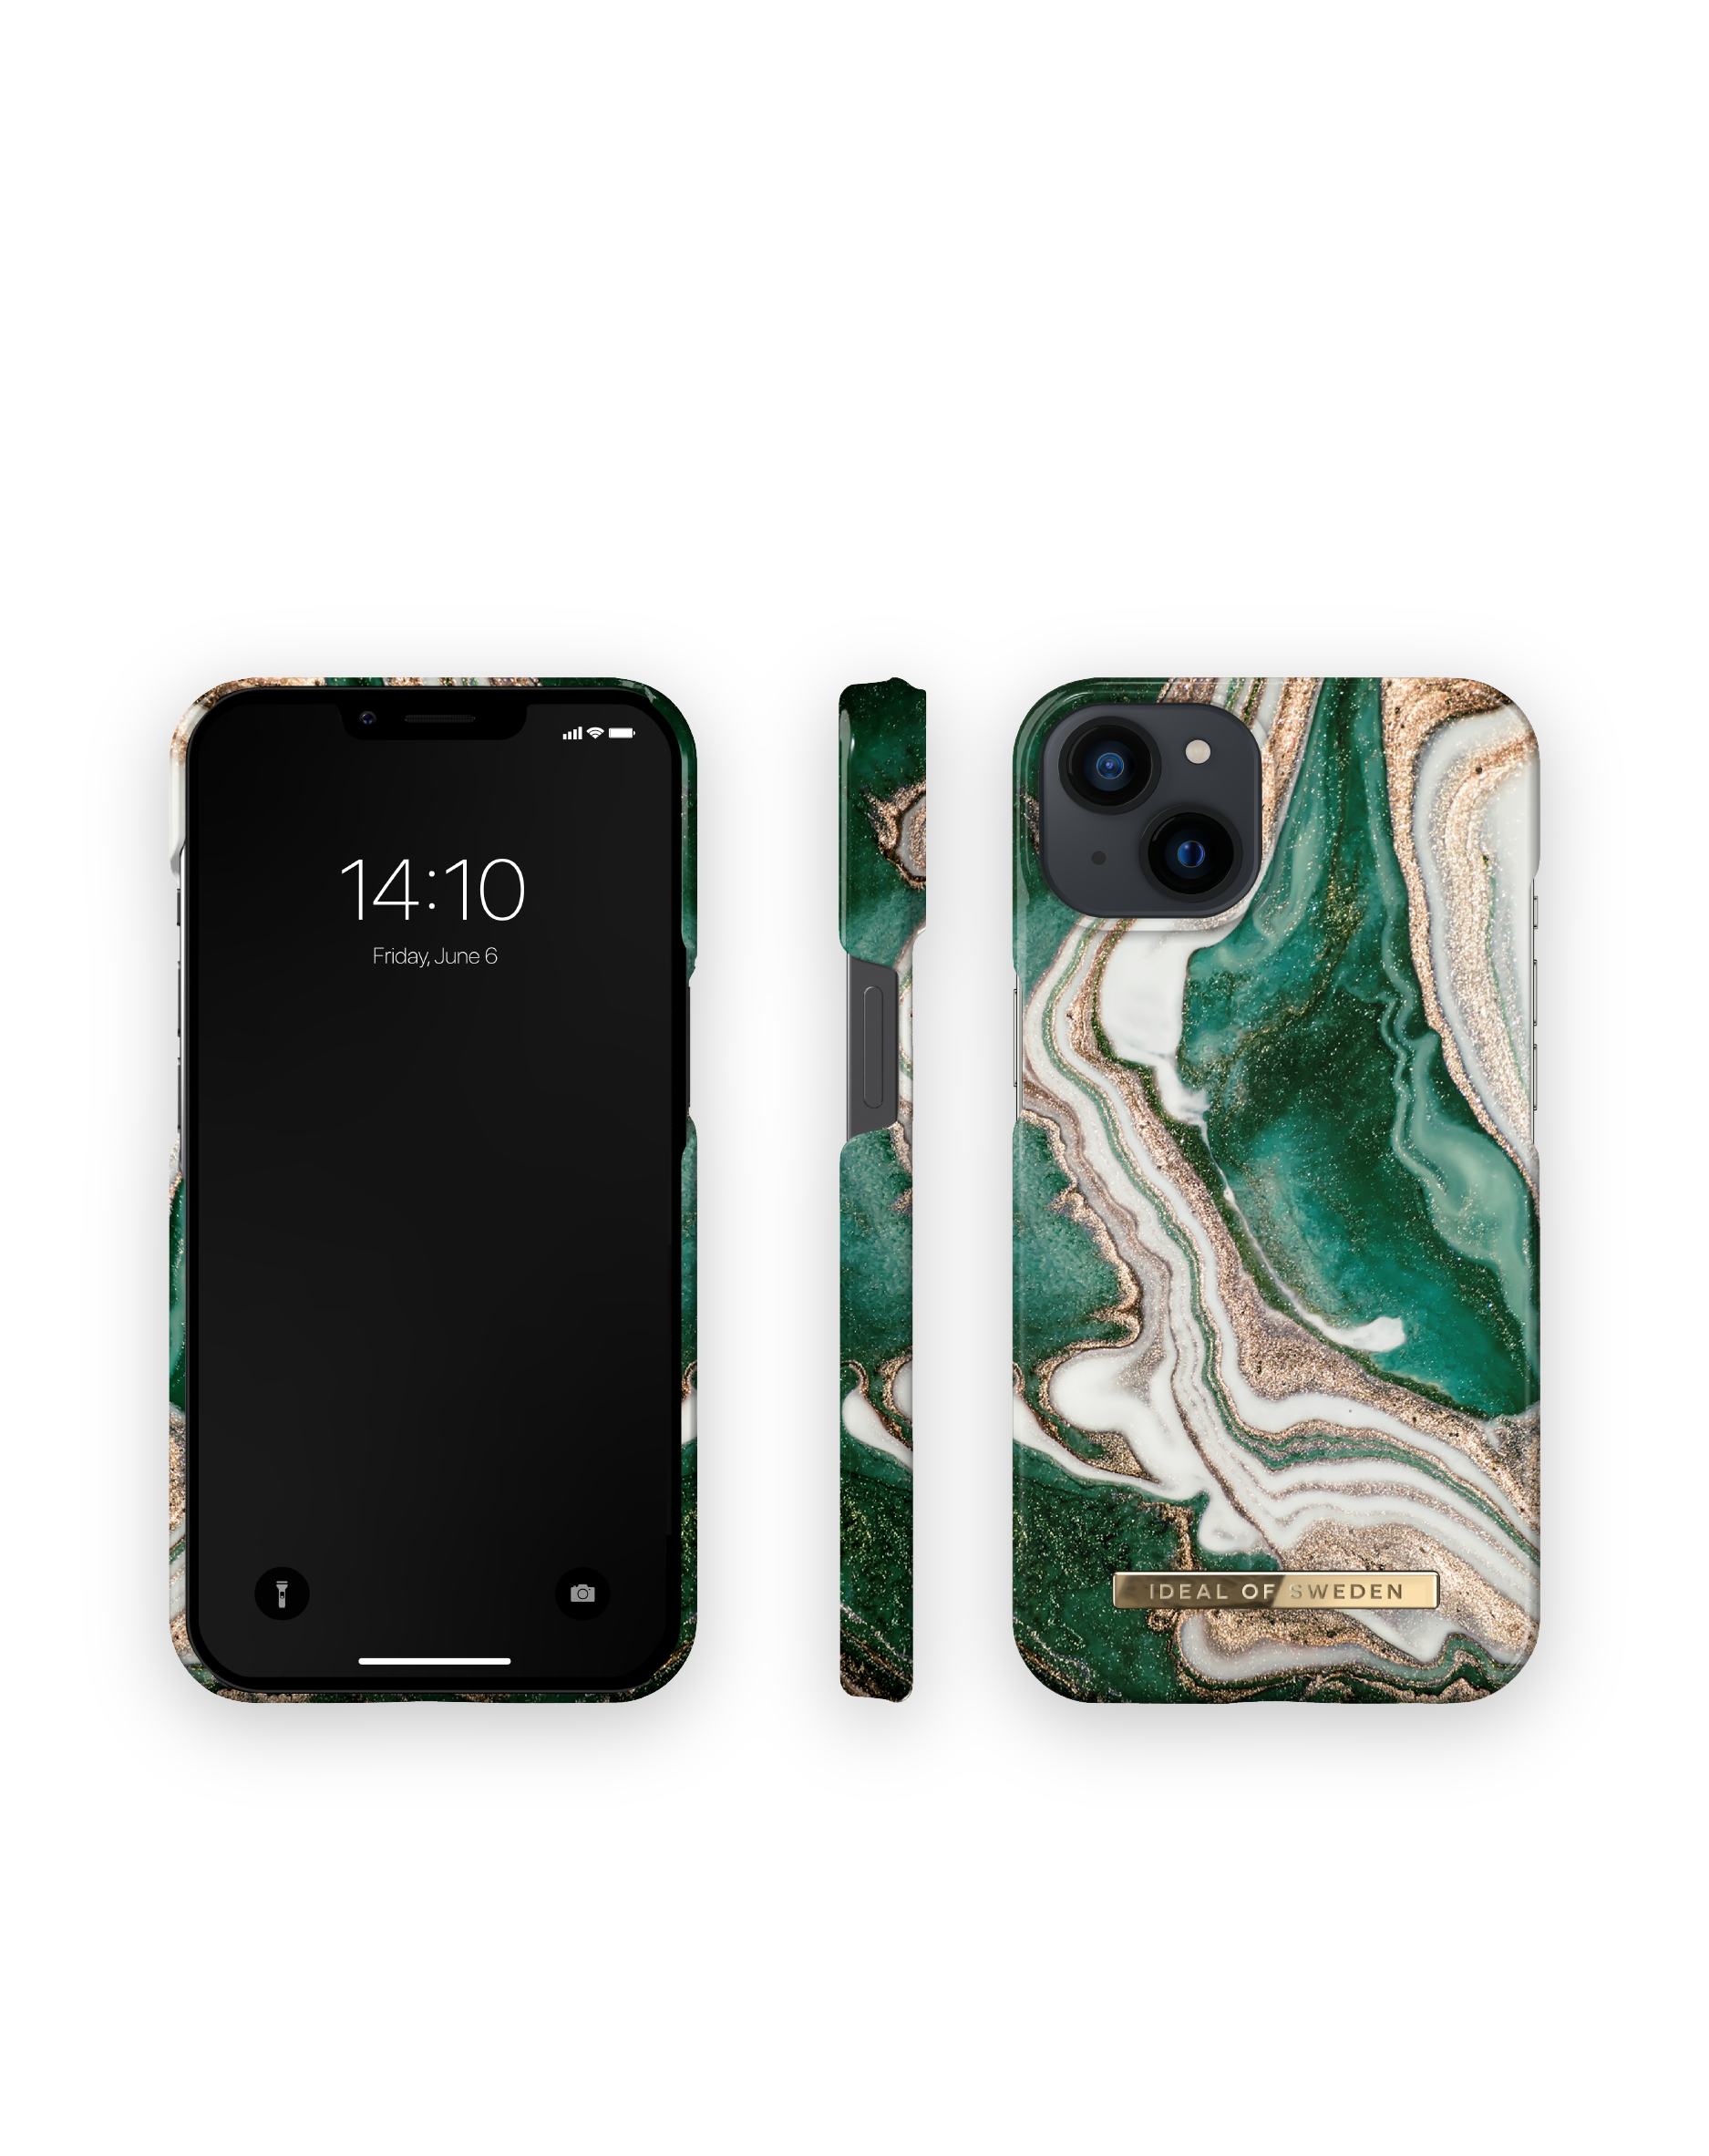 iPhone Golden Backcover, Marble OF Apple, 13, Jade IDFCAW18-I2161-98, IDEAL SWEDEN